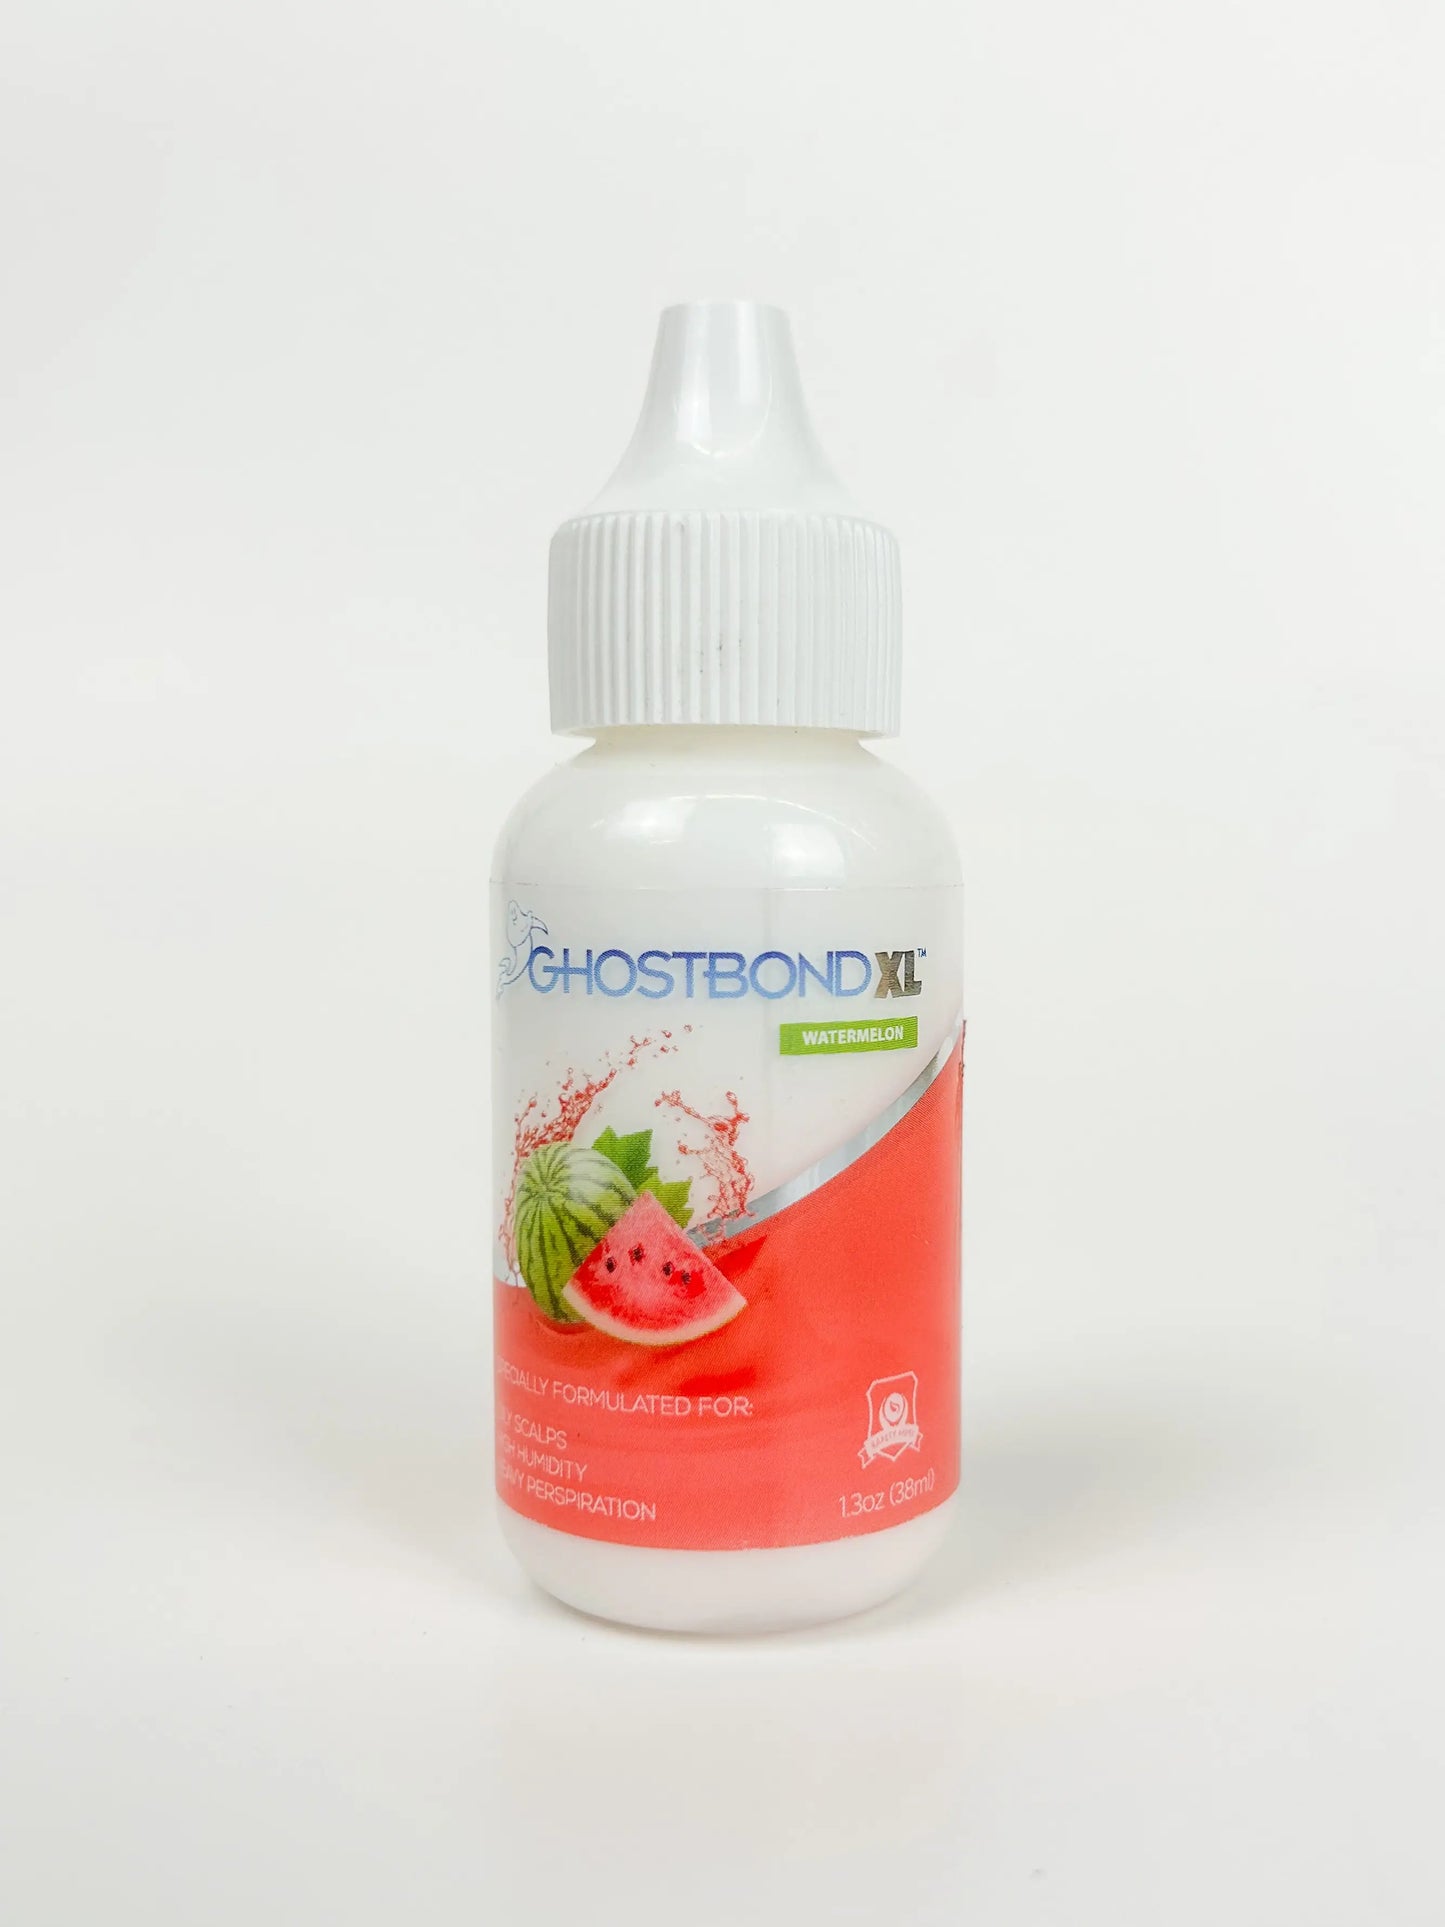 Ghostbond XL Watermelon Lace Glue